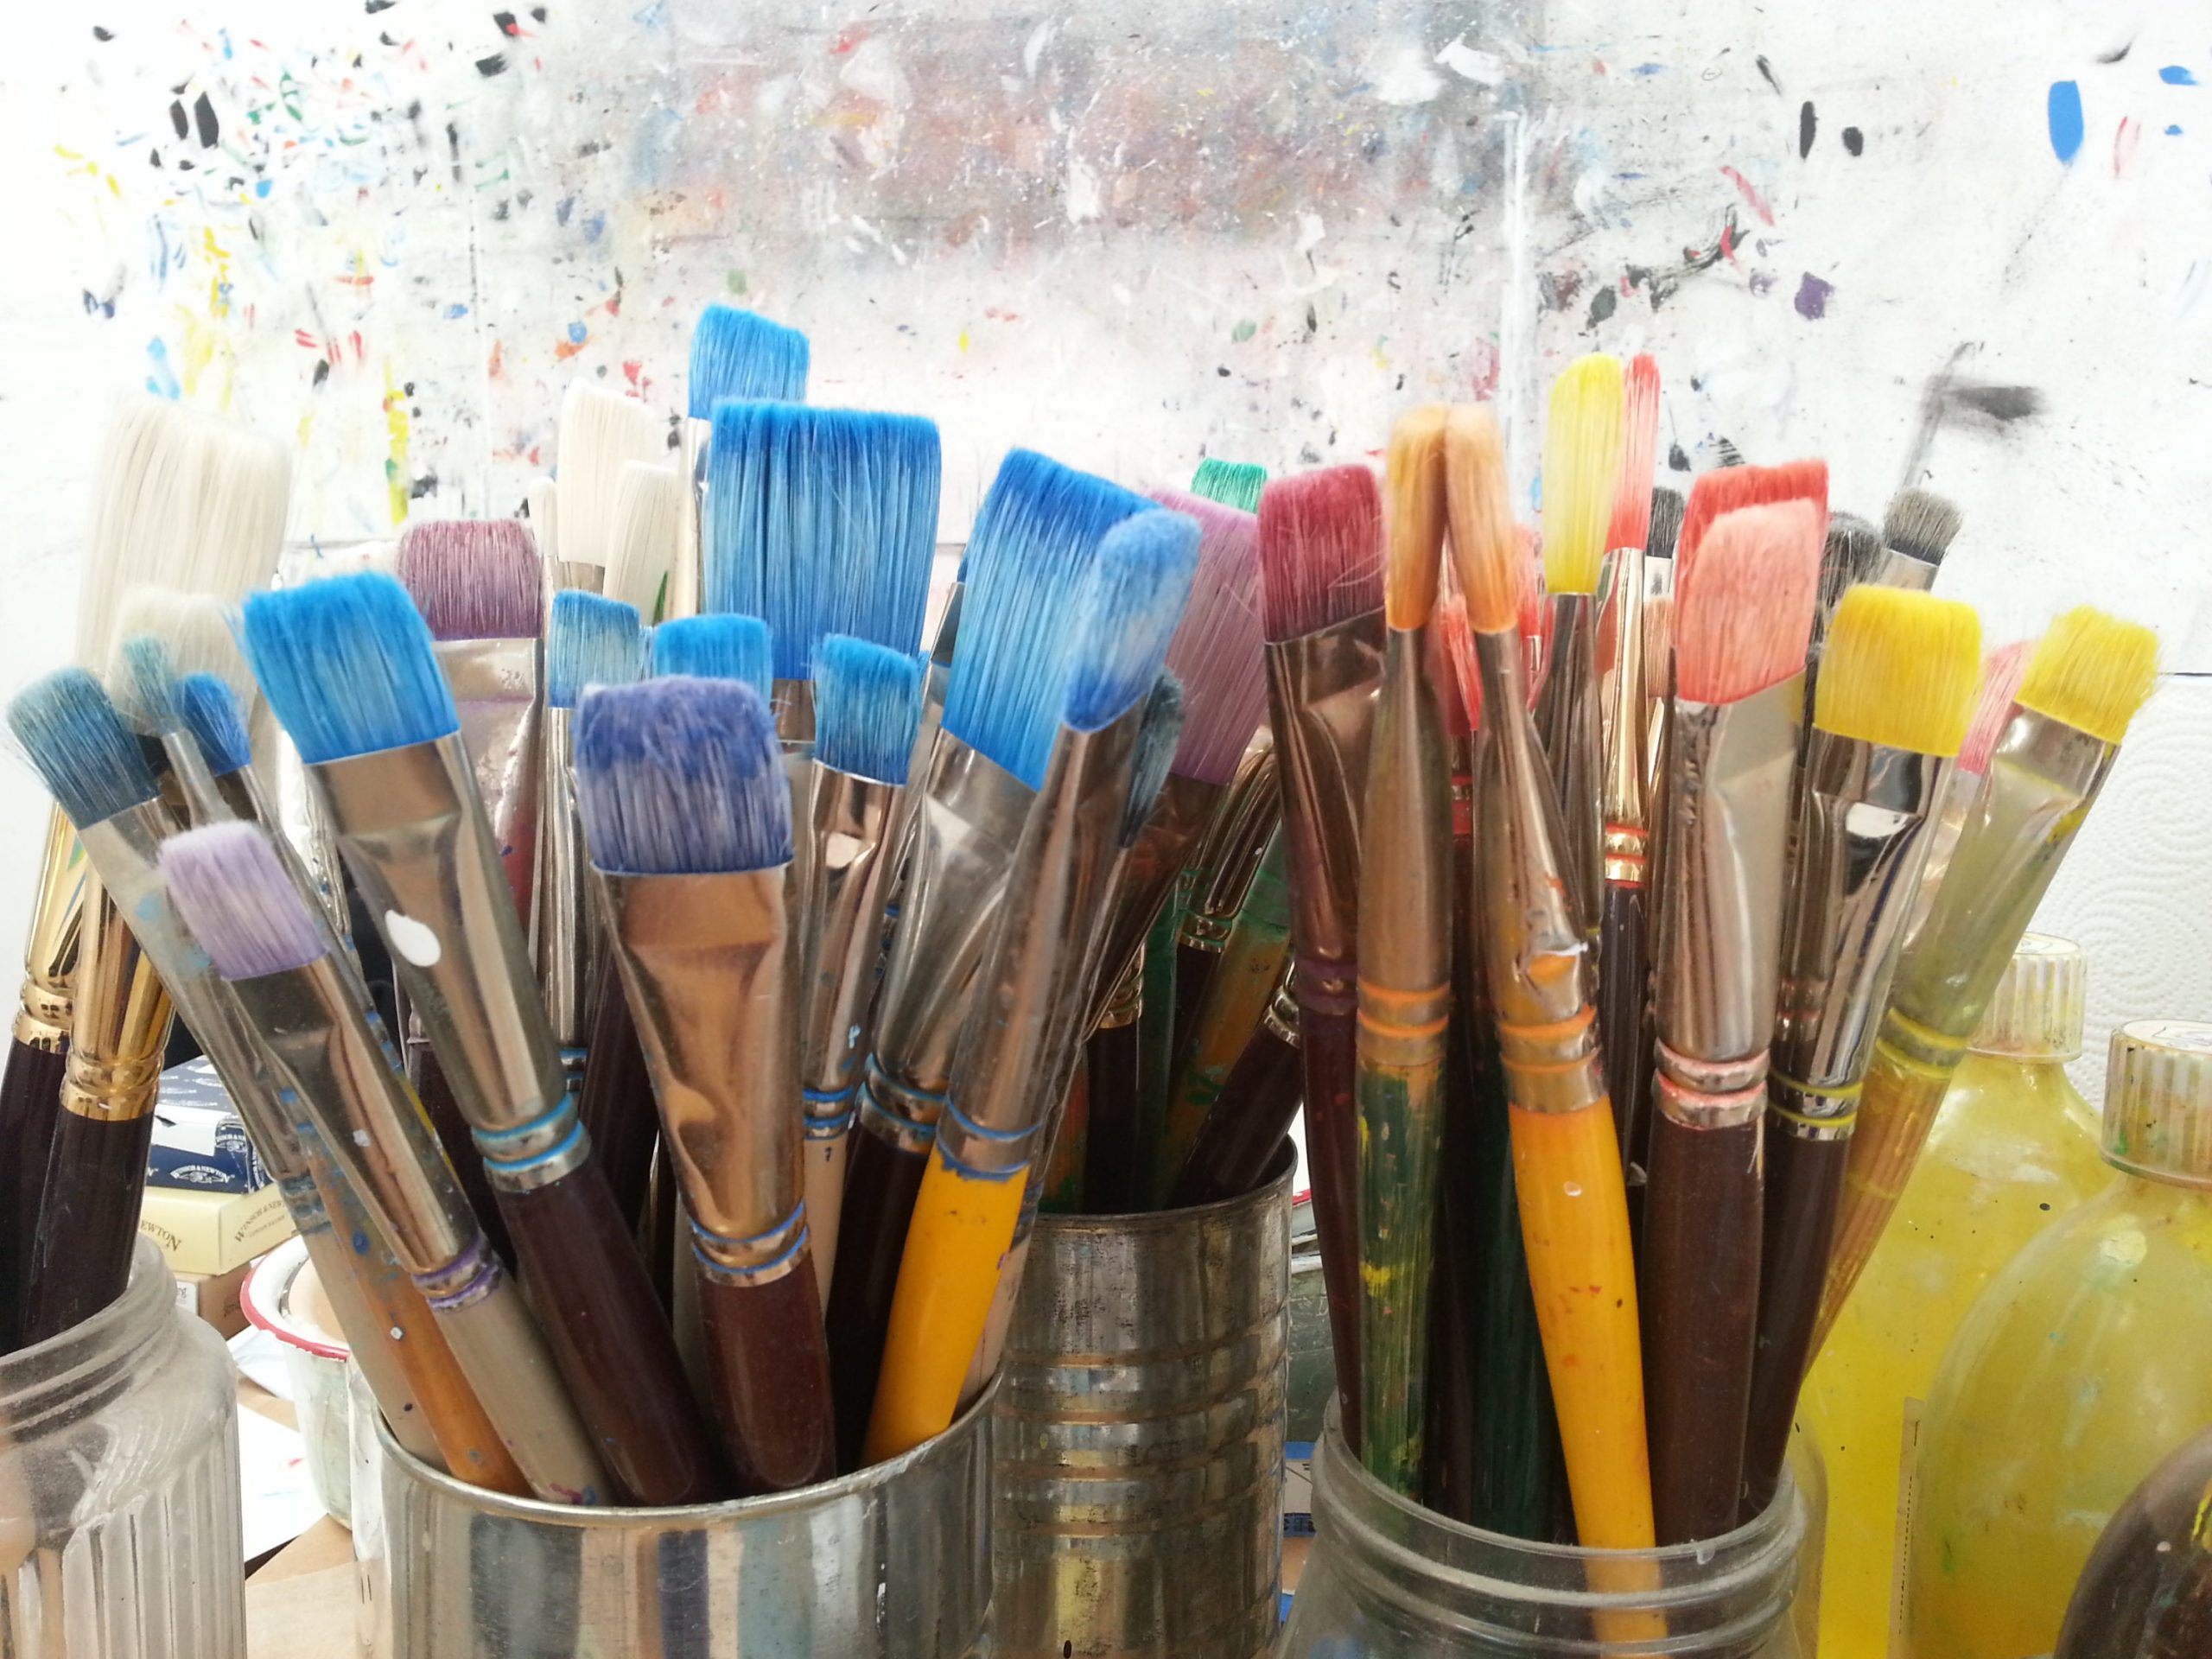 many paintbrushes in jars